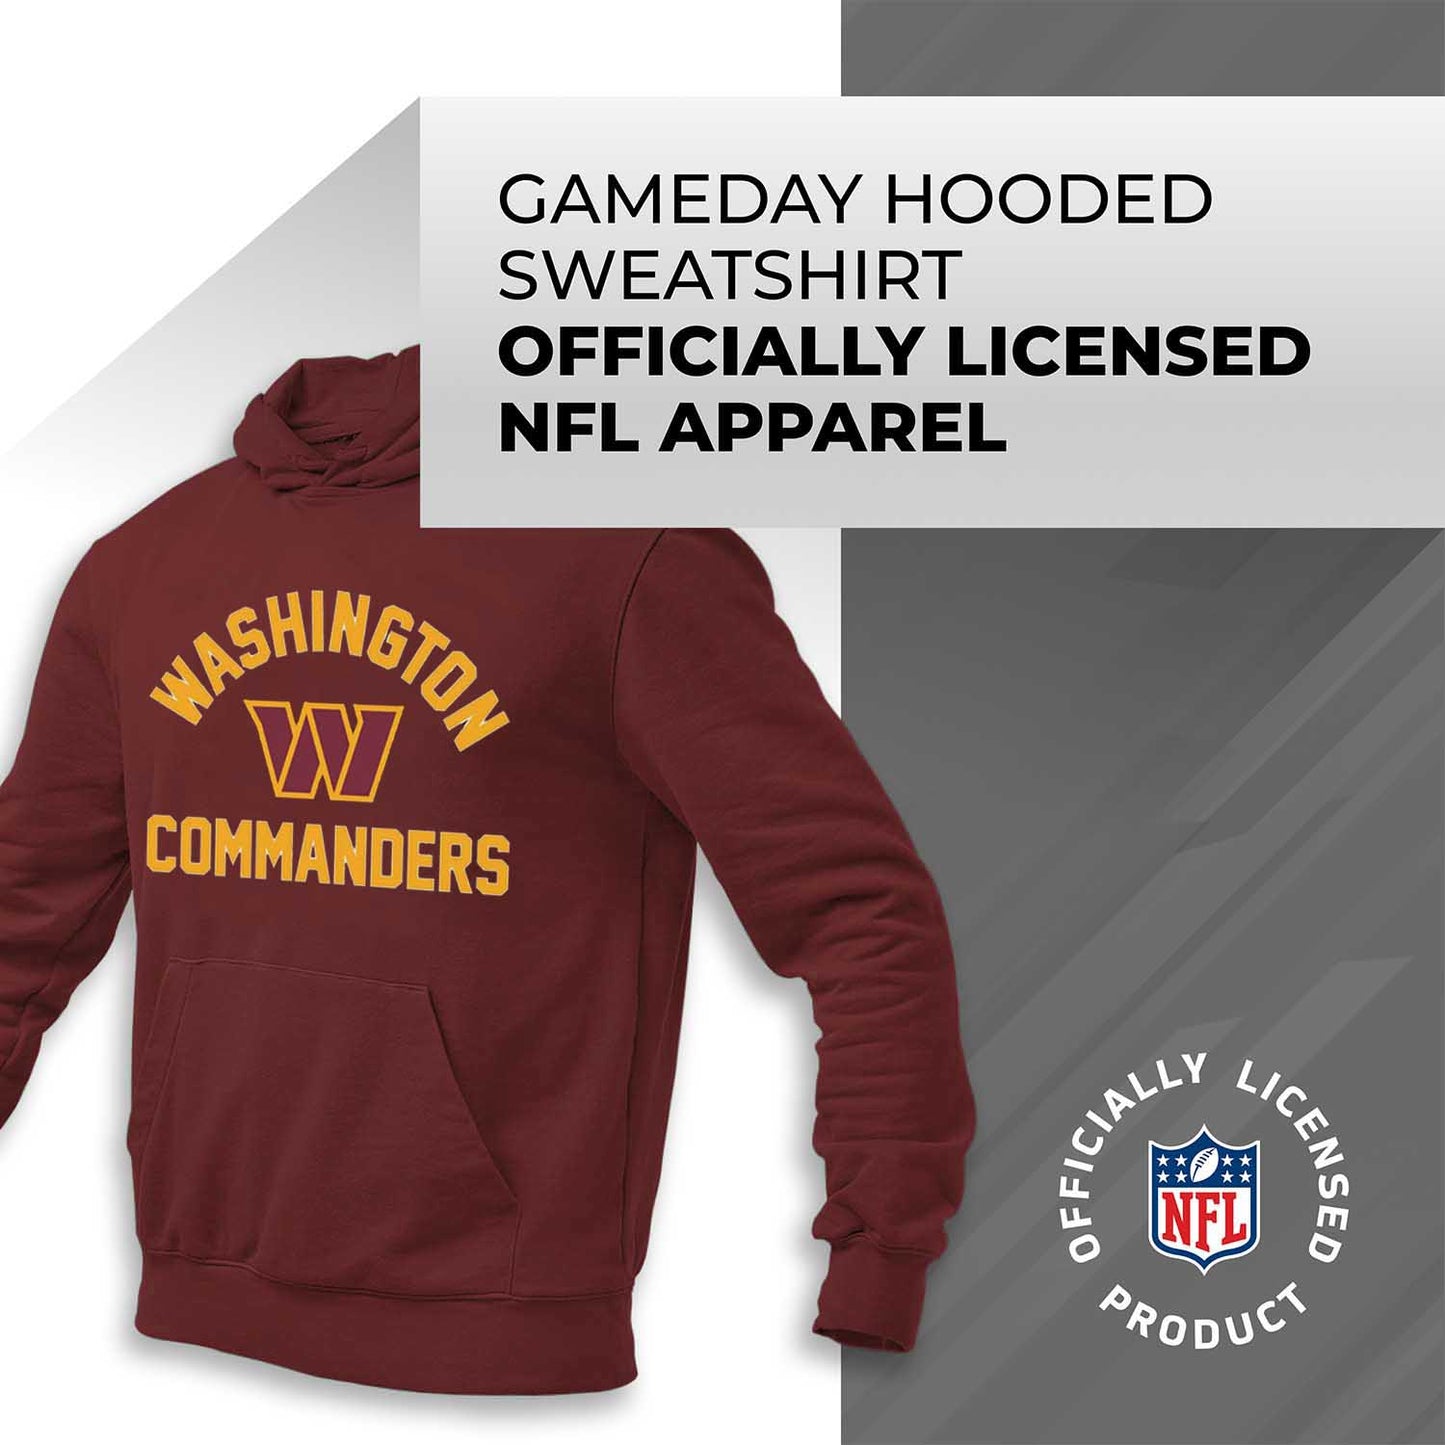 Washington Commanders NFL Adult Gameday Hooded Sweatshirt - Maroon